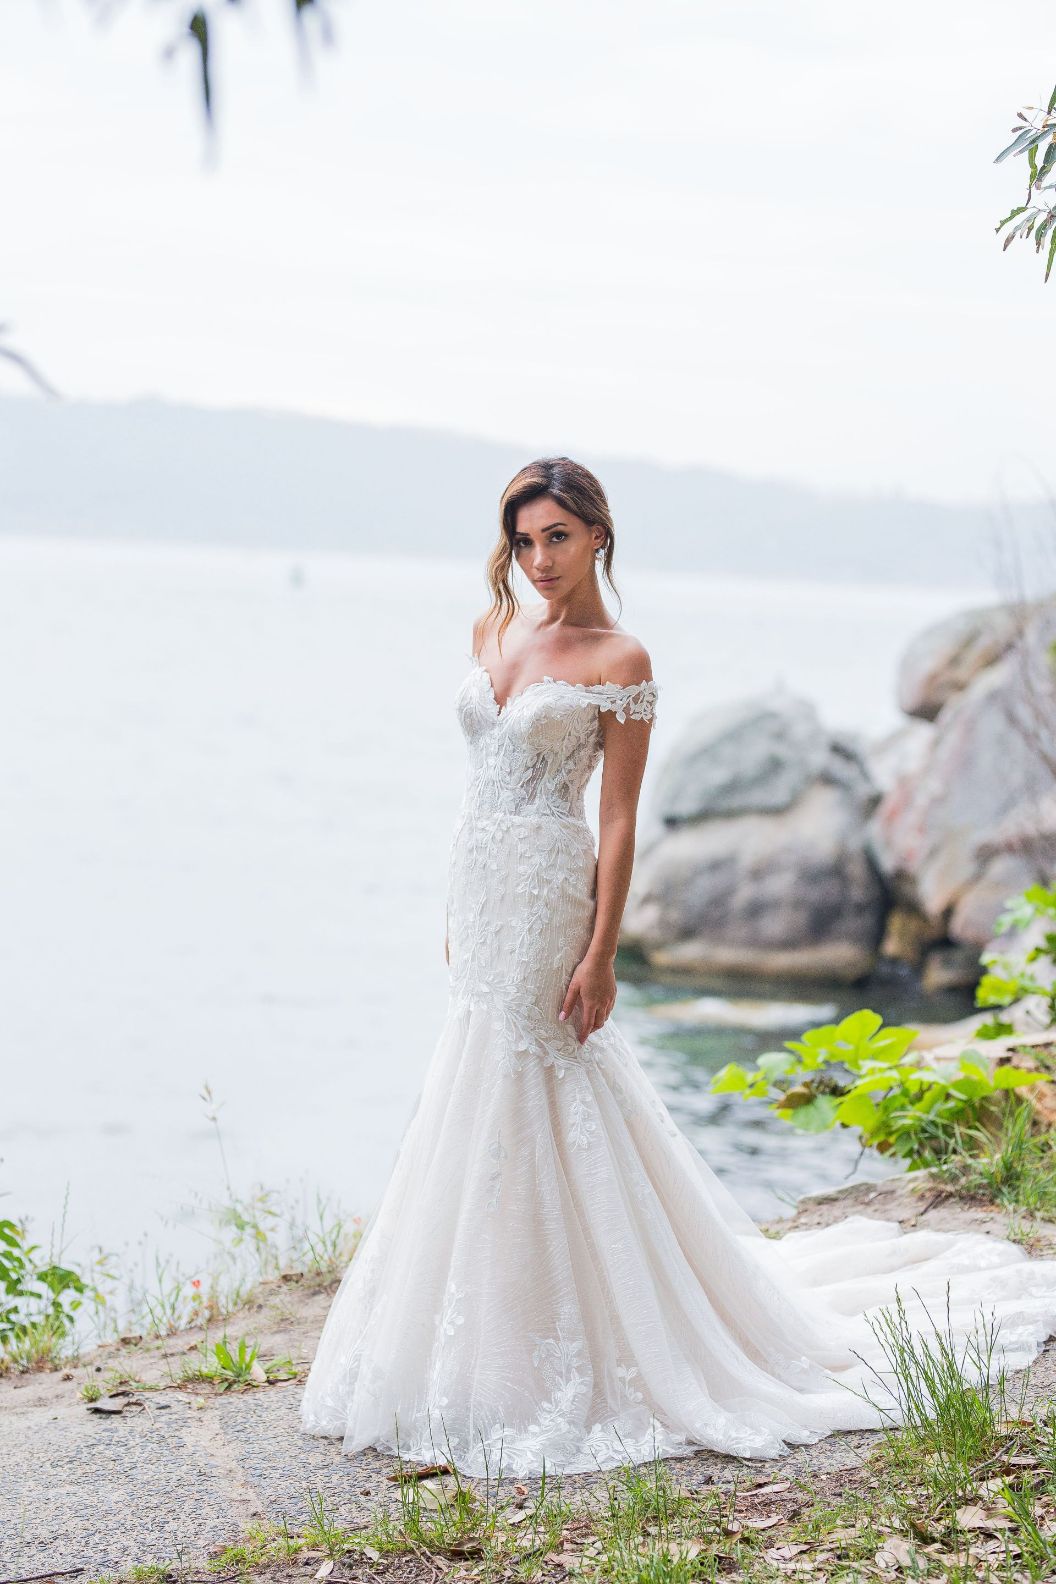 khatira alina couture bridal gown wedding dress australian designer sydney bride